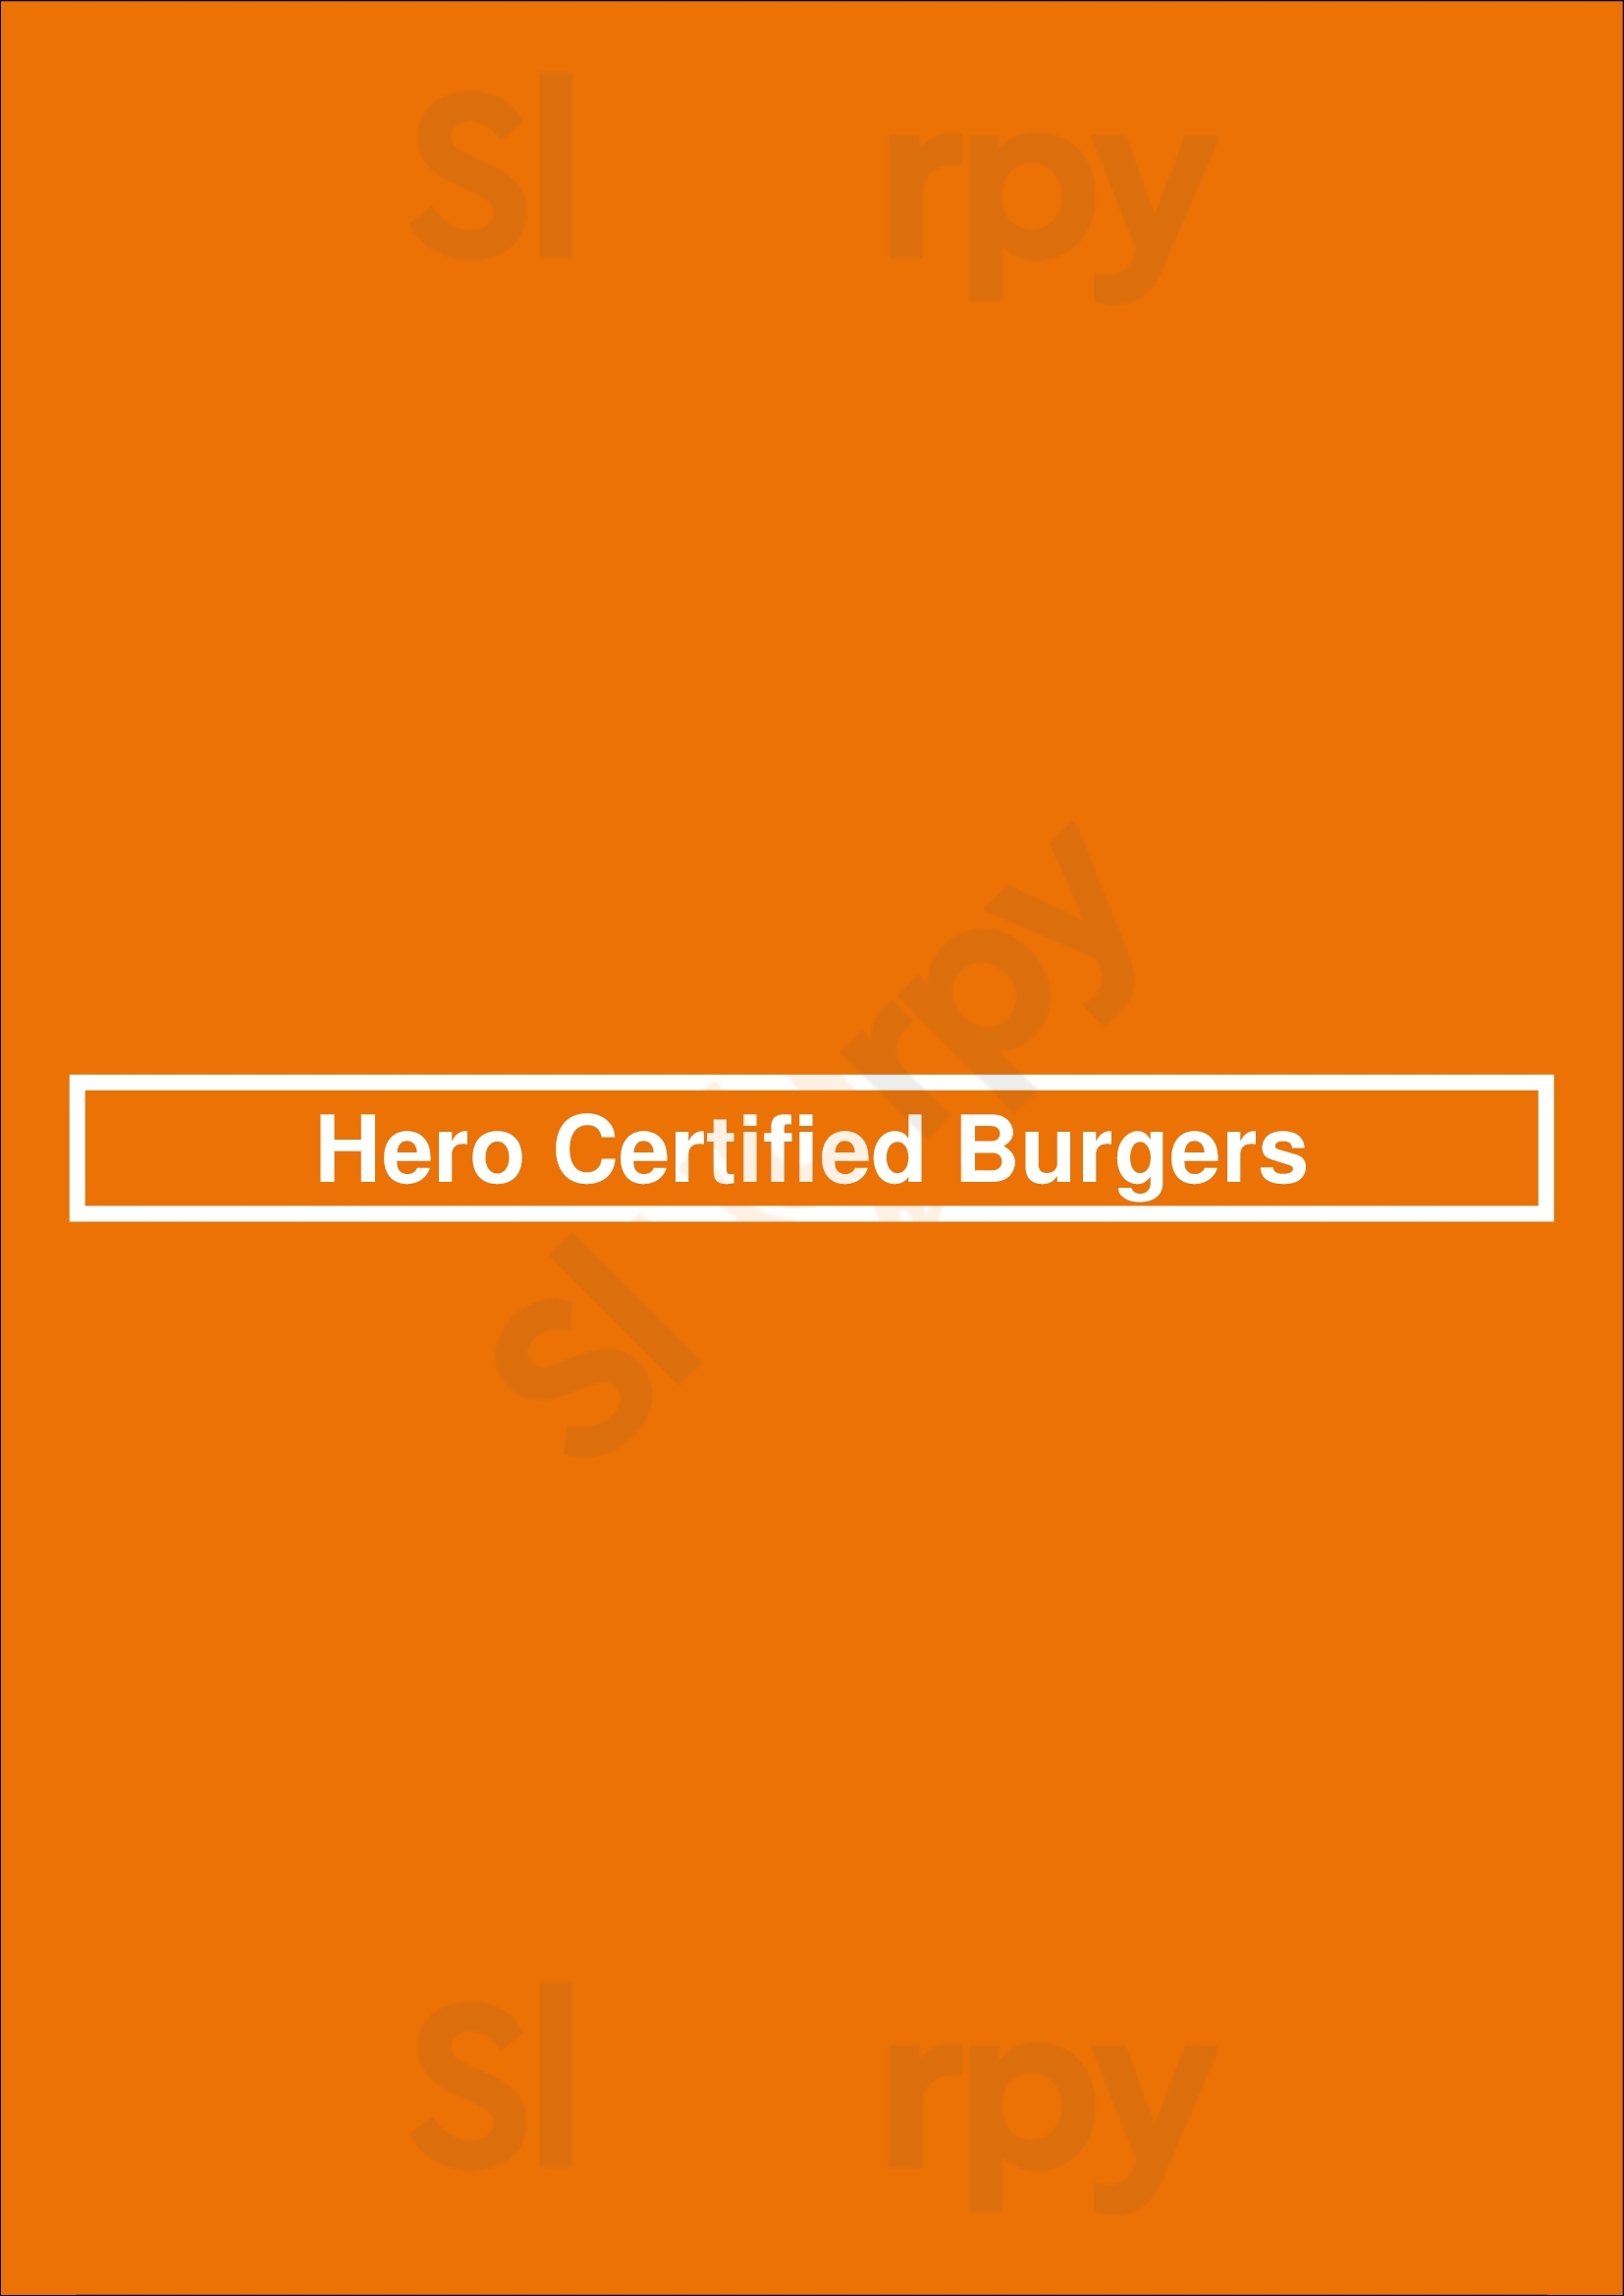 Hero Certified Burgers Oakville Menu - 1